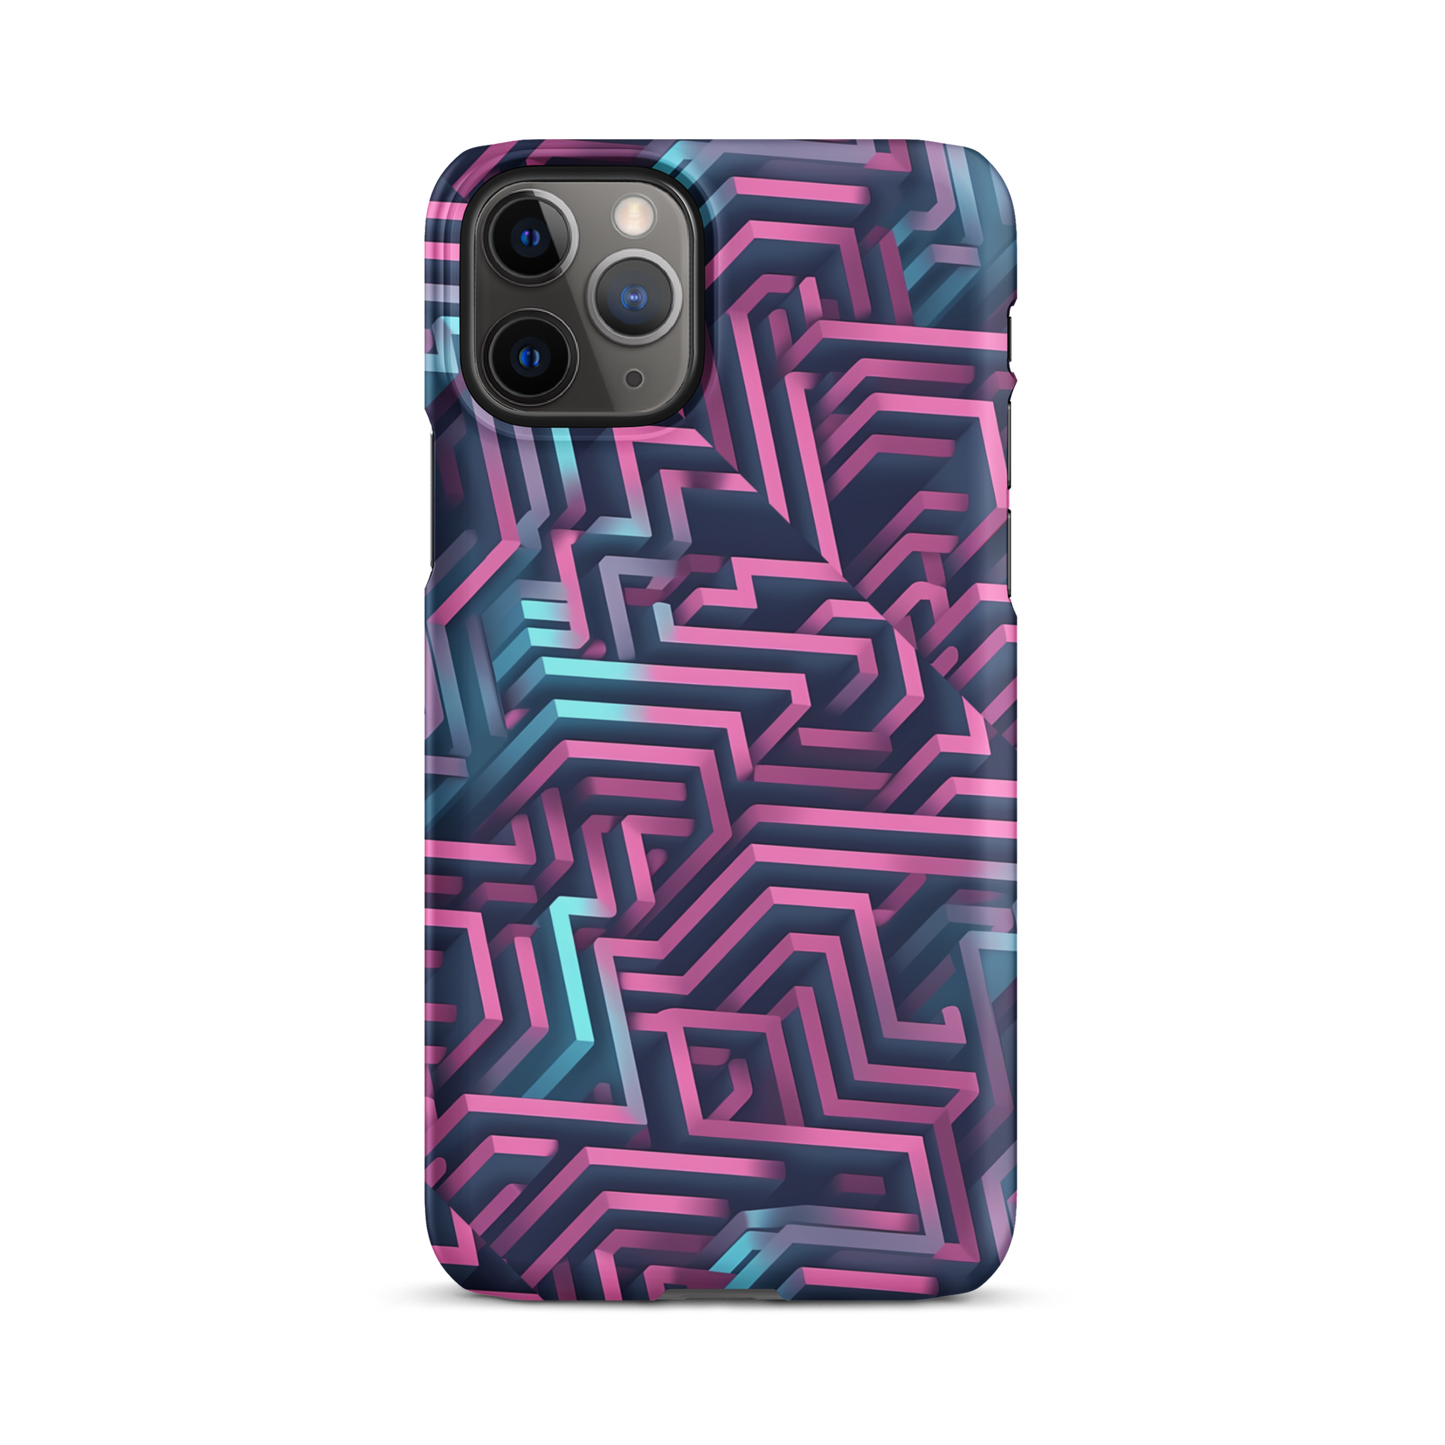 3D Maze Illusion | 3D Patterns | Snap Case for iPhone - #4